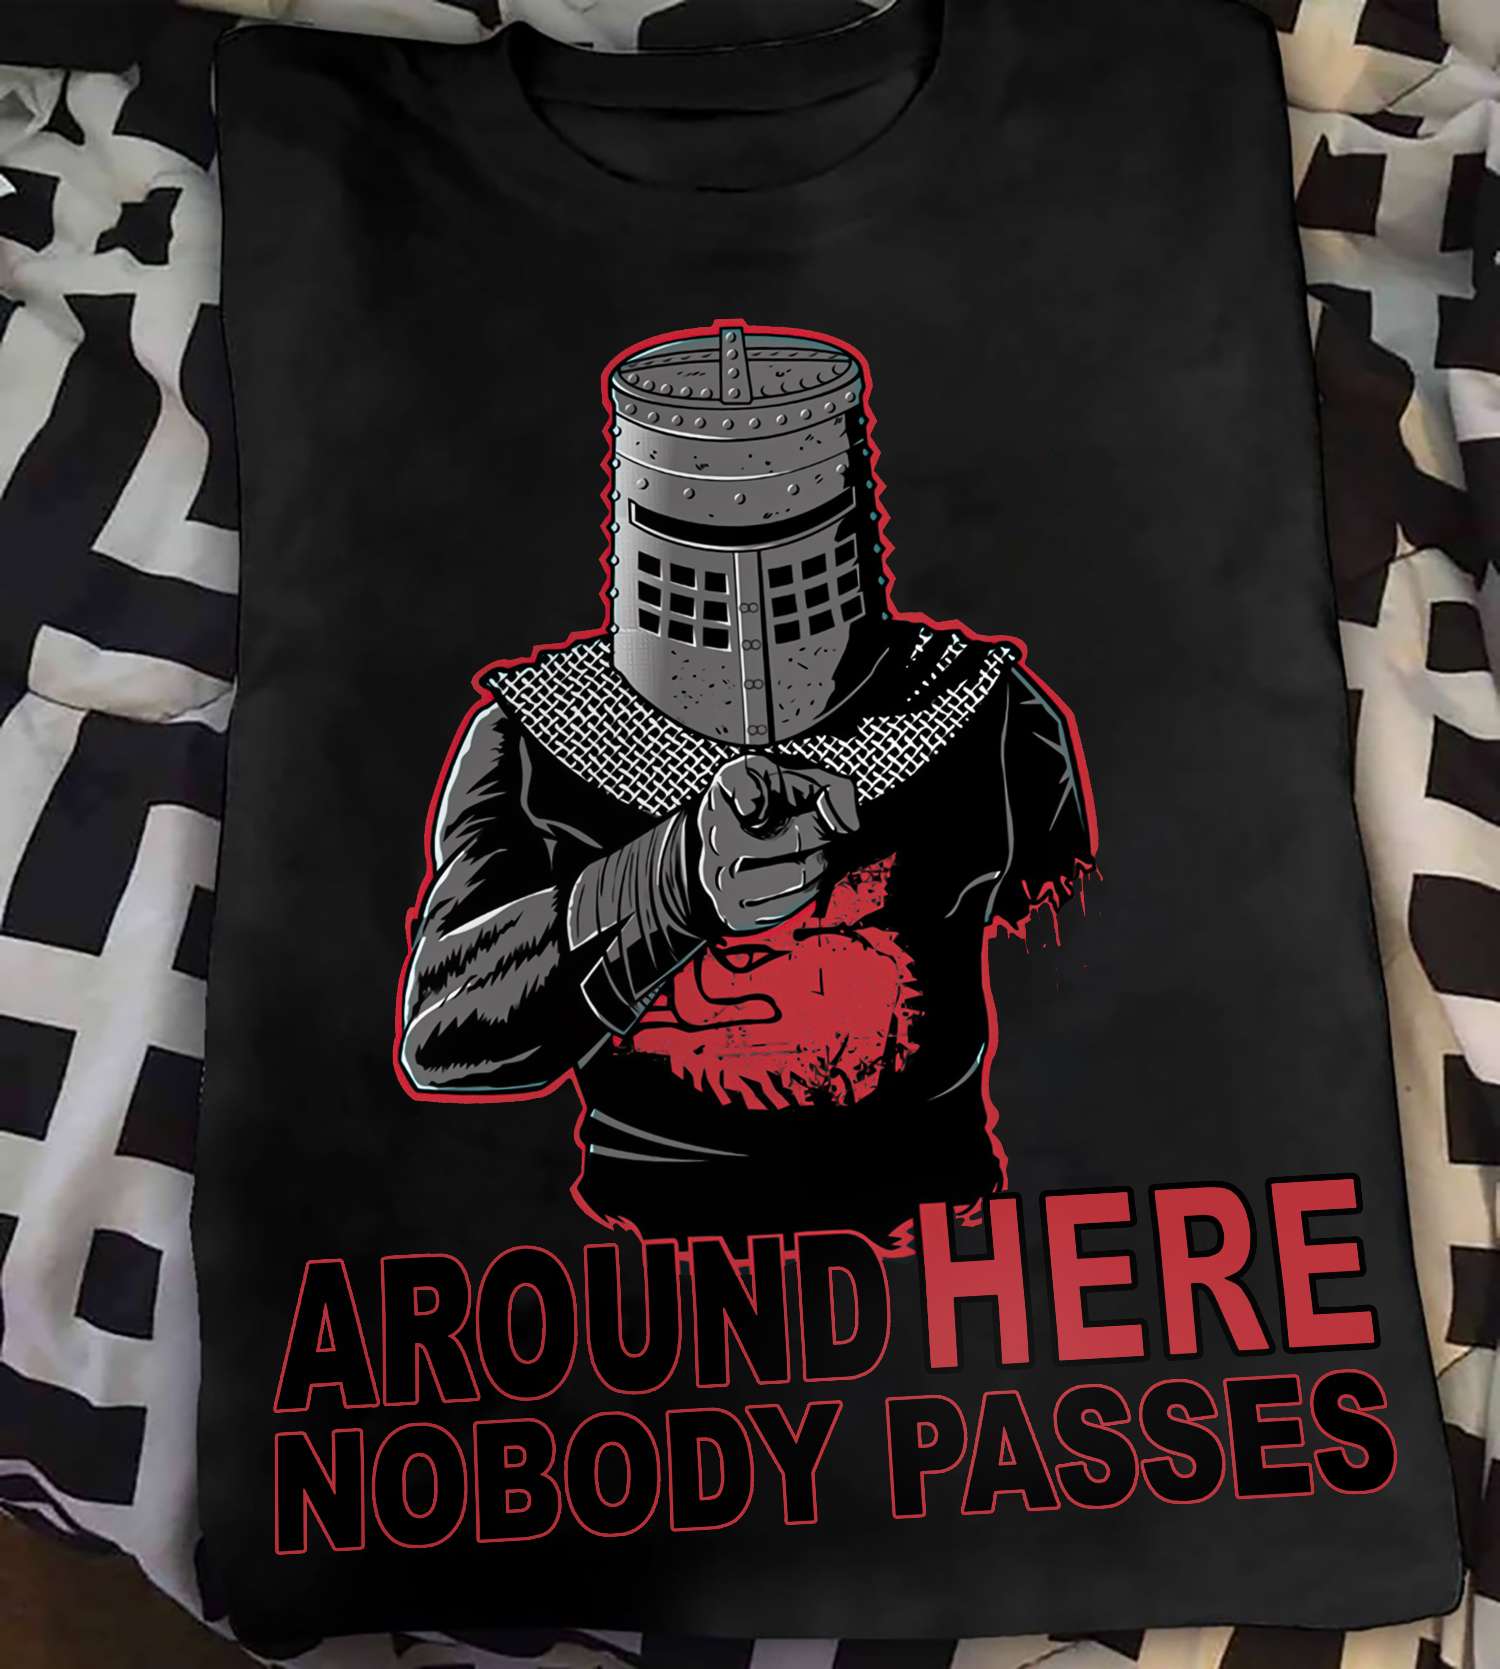 Around here nobody passes - Monty Ponty, the Dark Knight